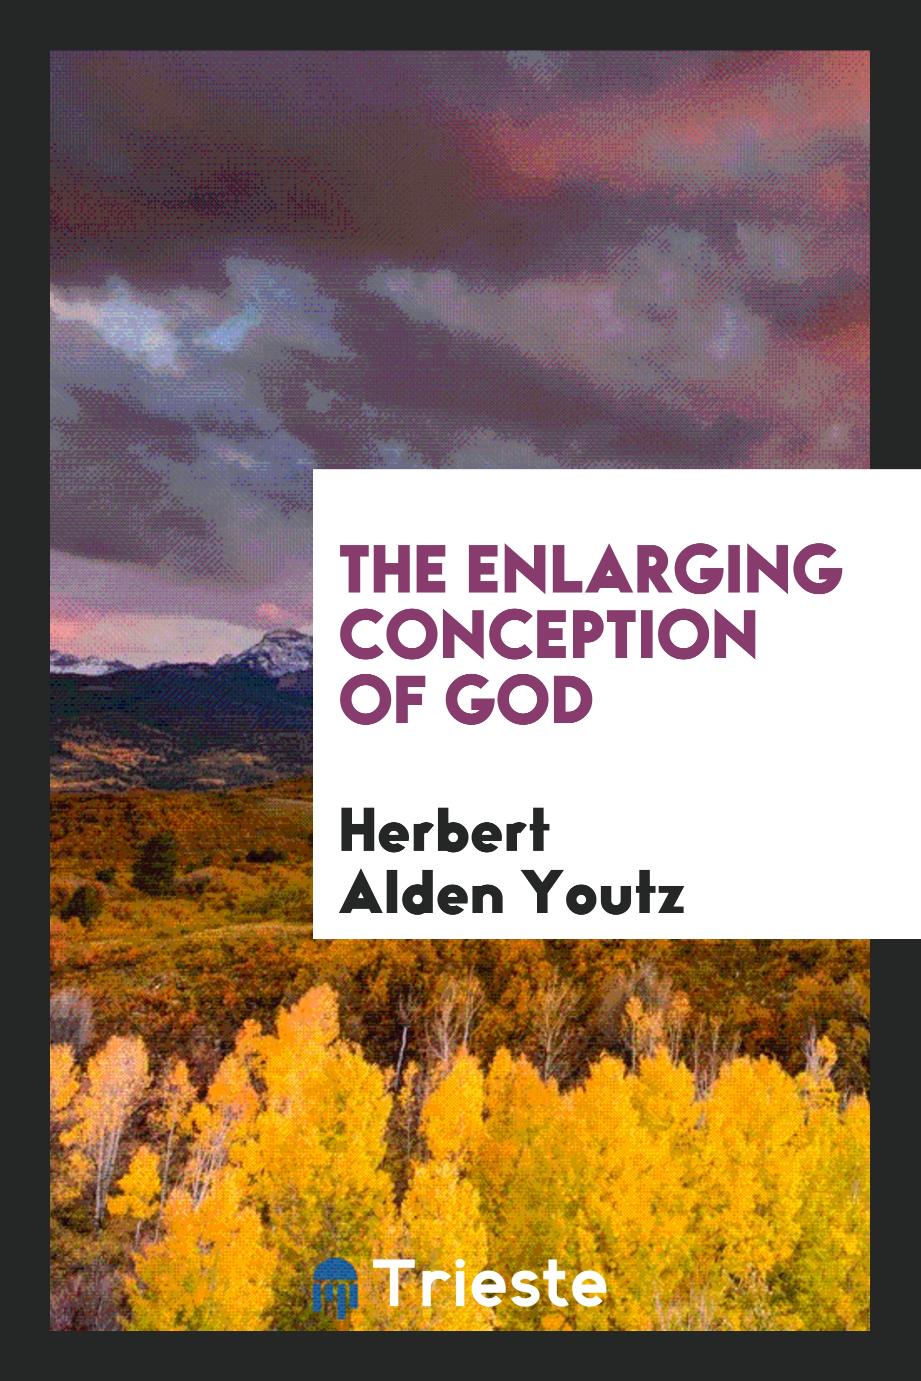 The enlarging conception of God